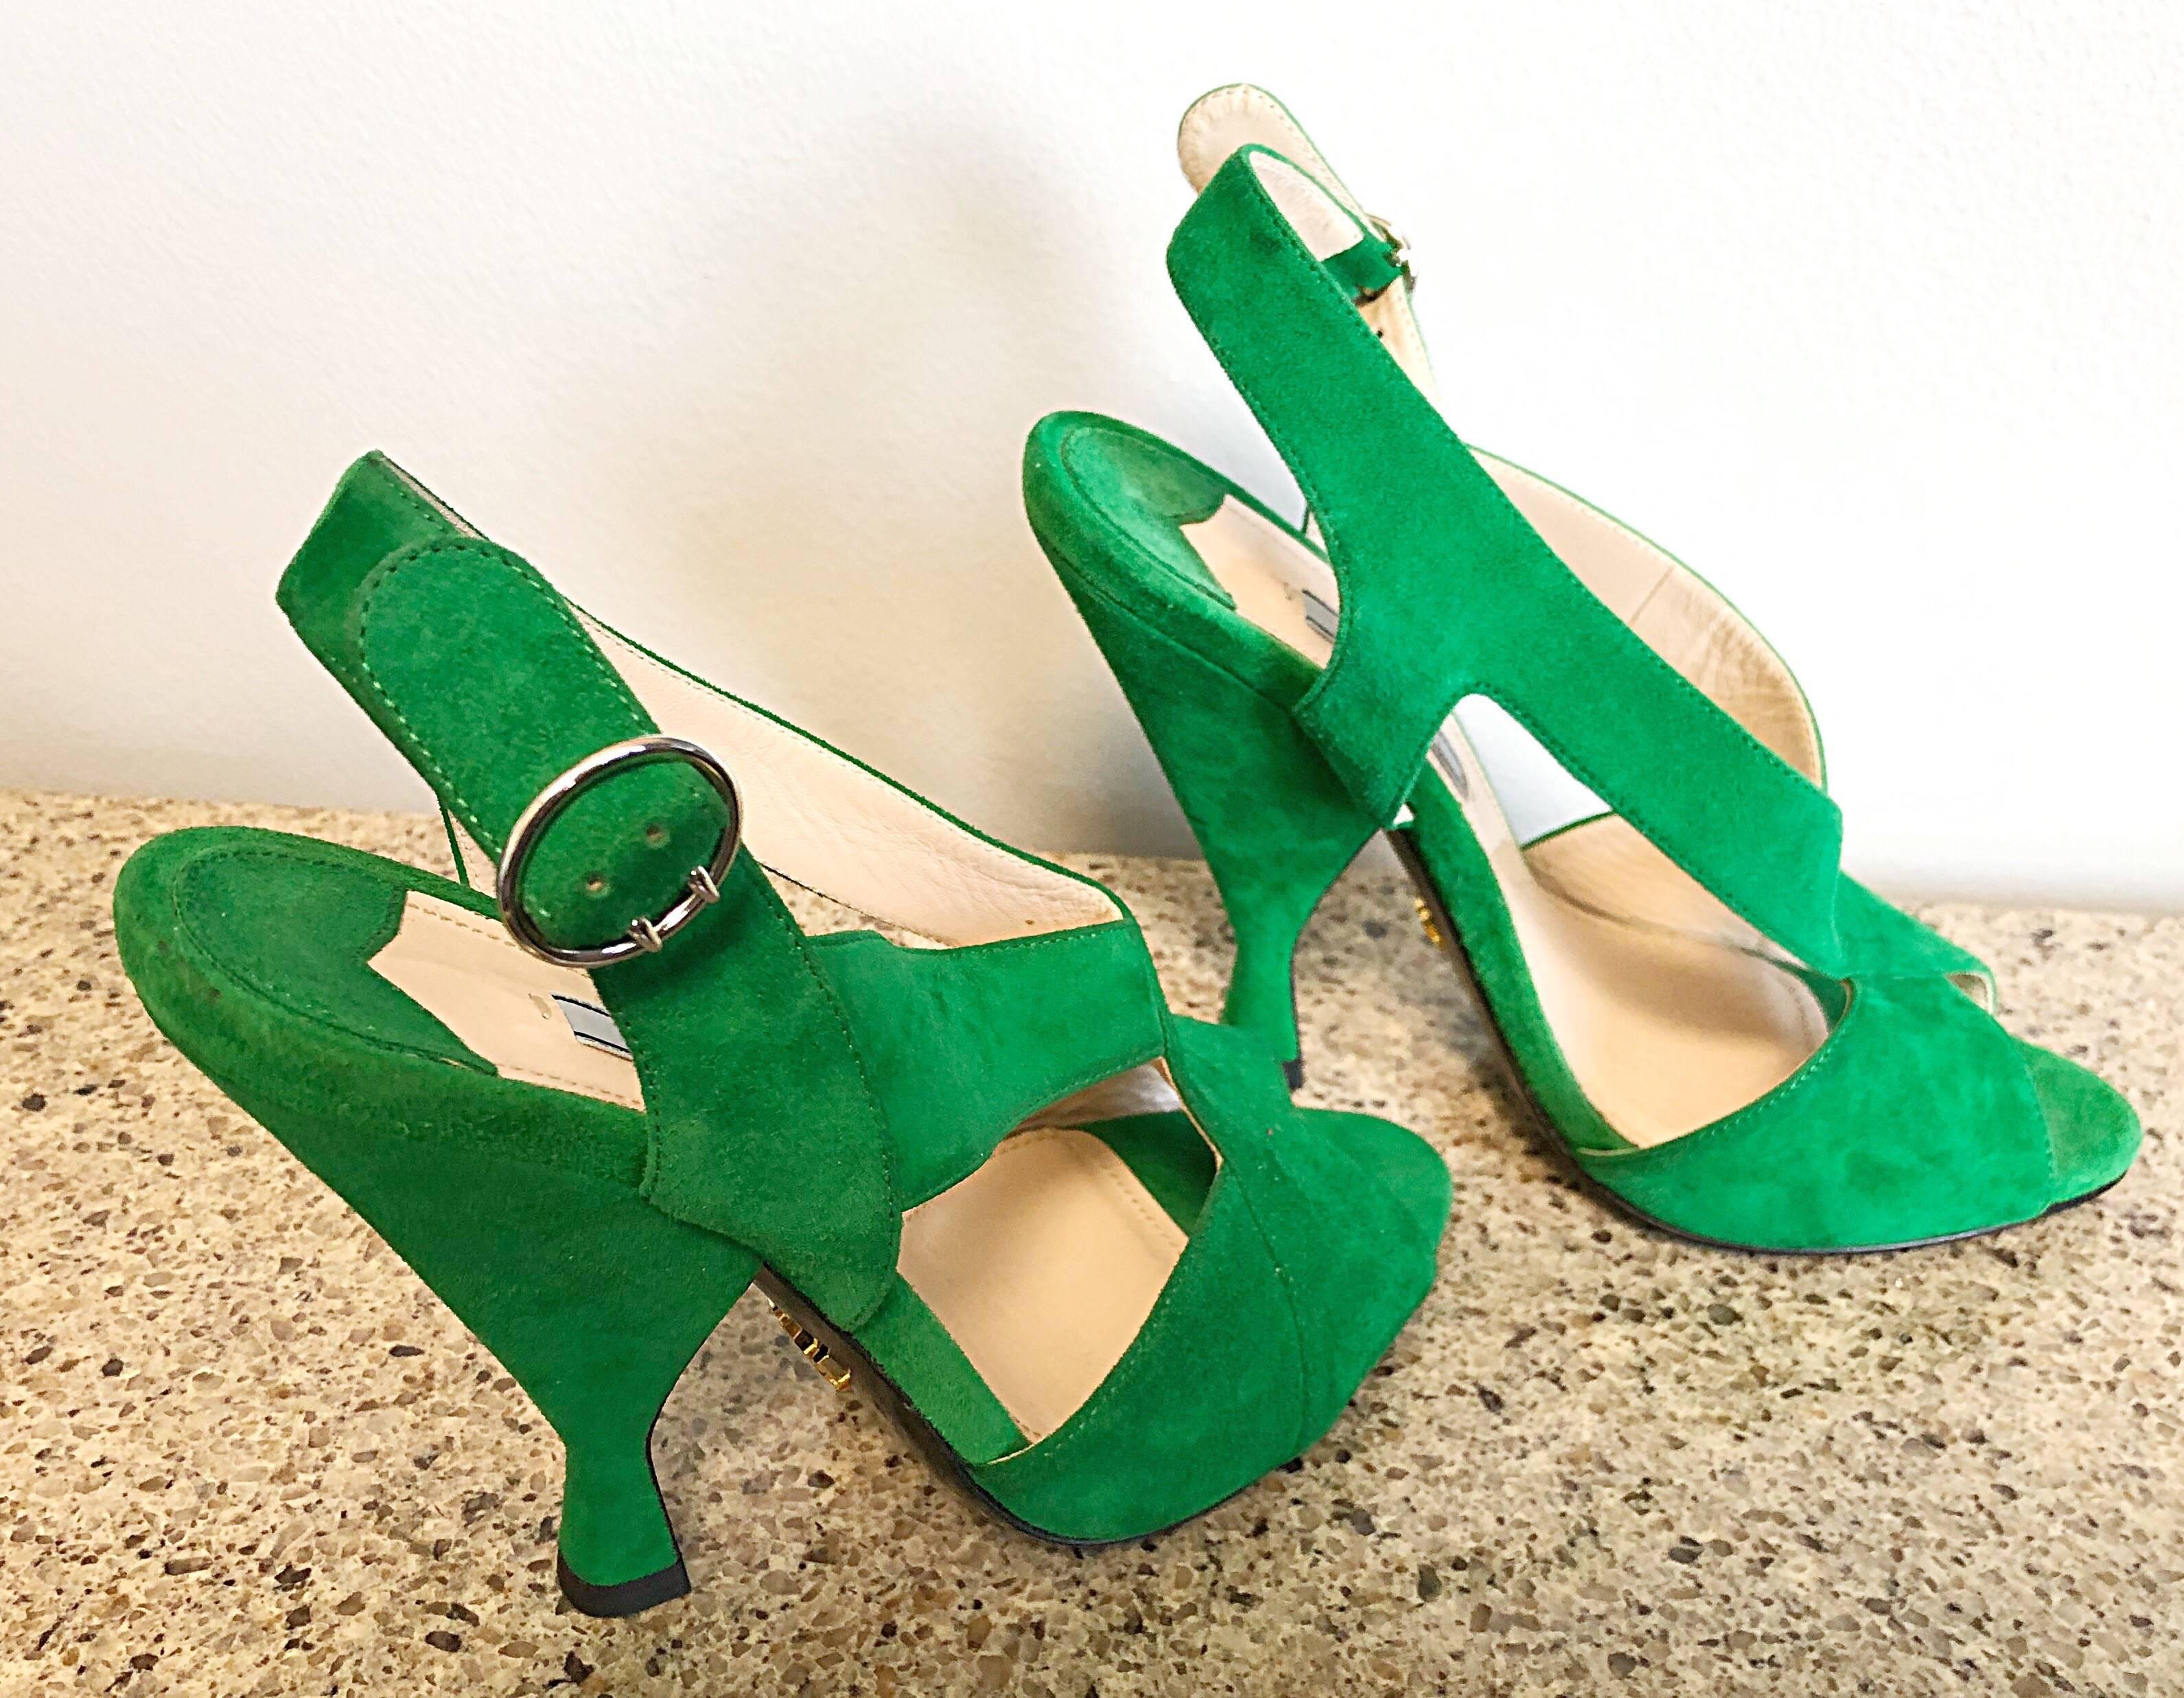 Buy > kelly green sandals heels > in stock